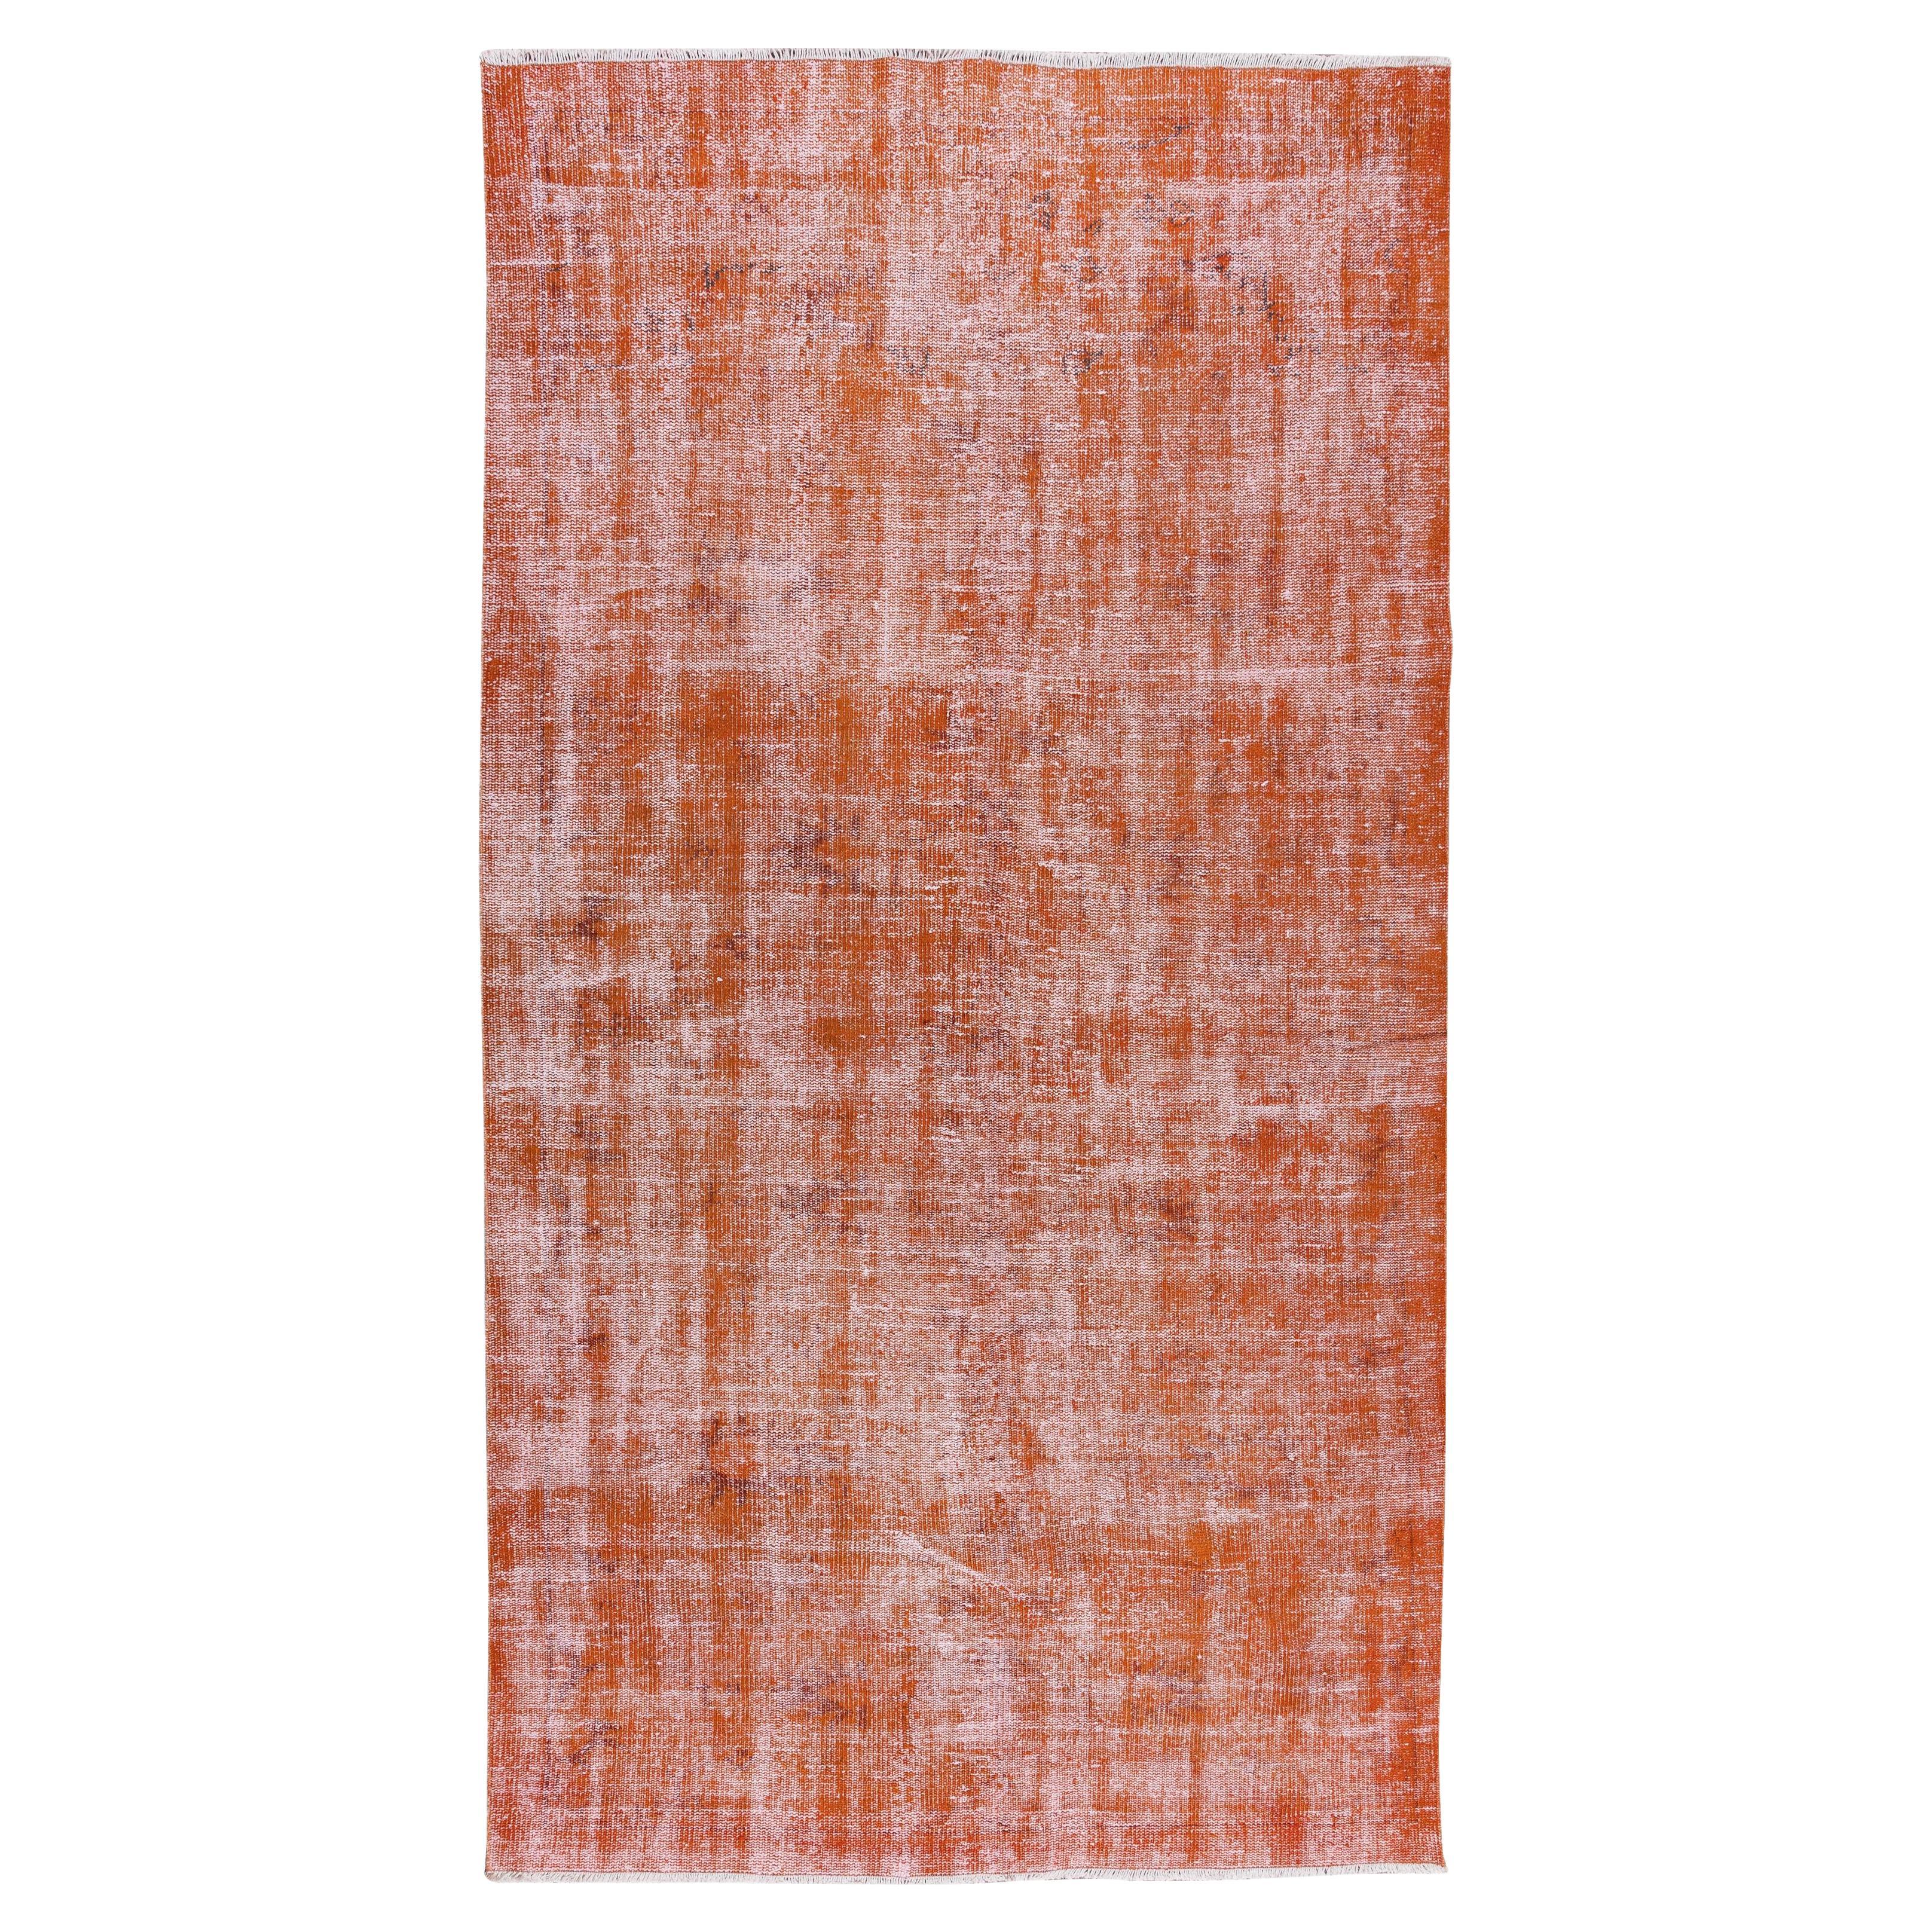 5.3x9.6 Ft Hand Knotted Turkish Area Rug, Distressed Vintage Orange Carpet For Sale